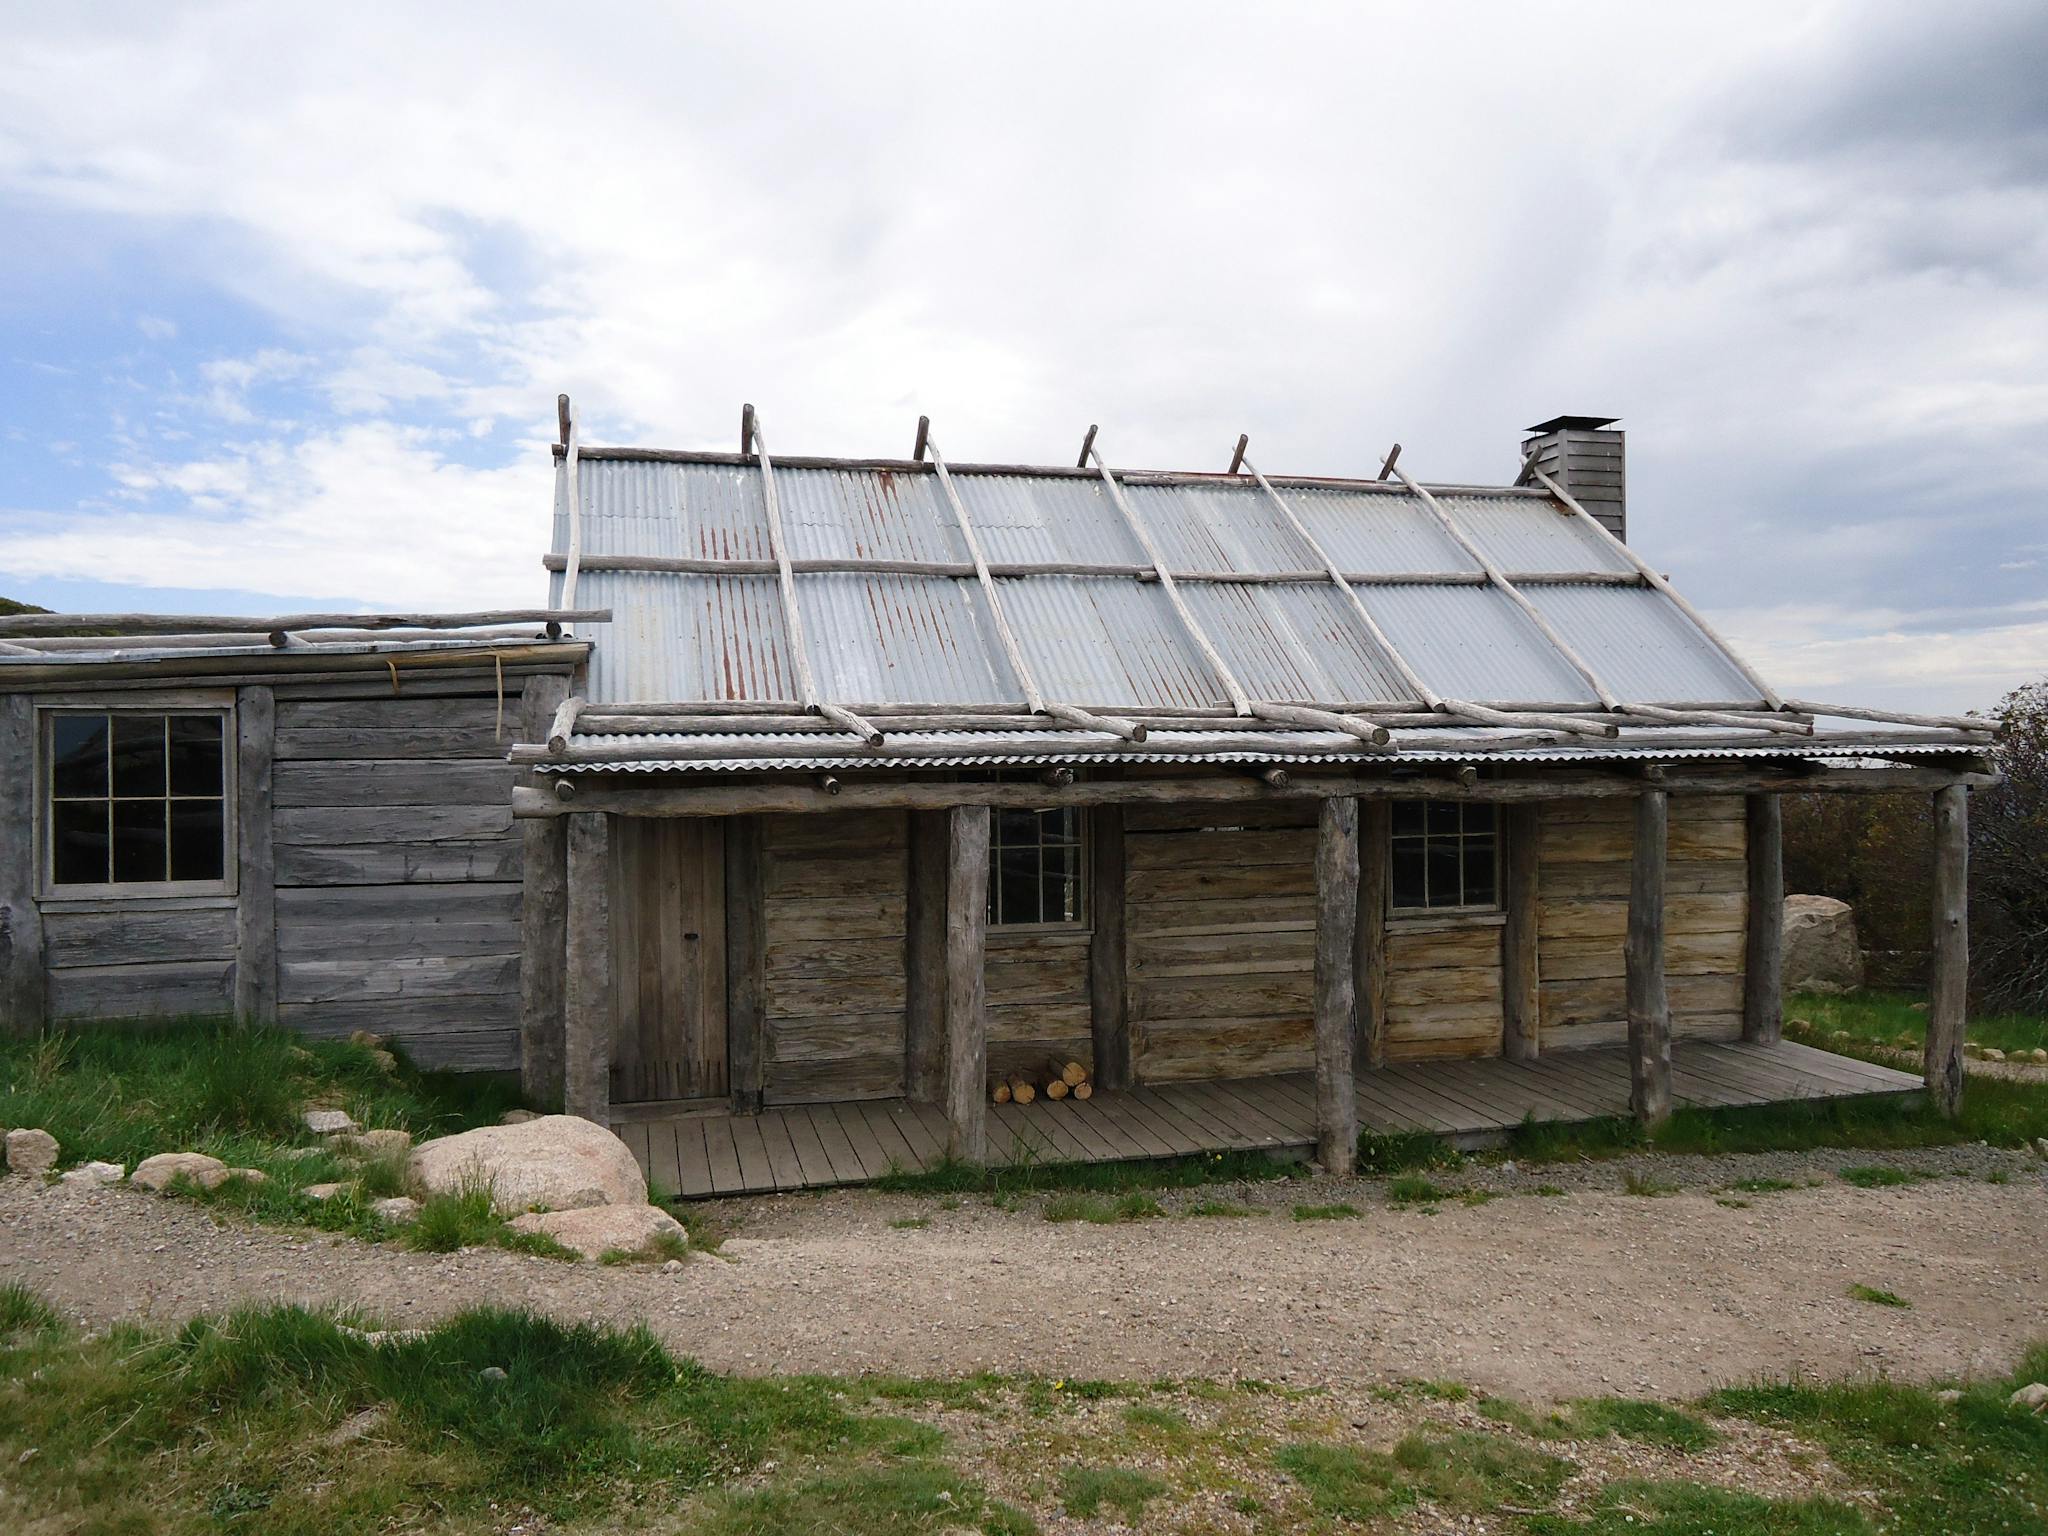 Craig's Hut in November 2012